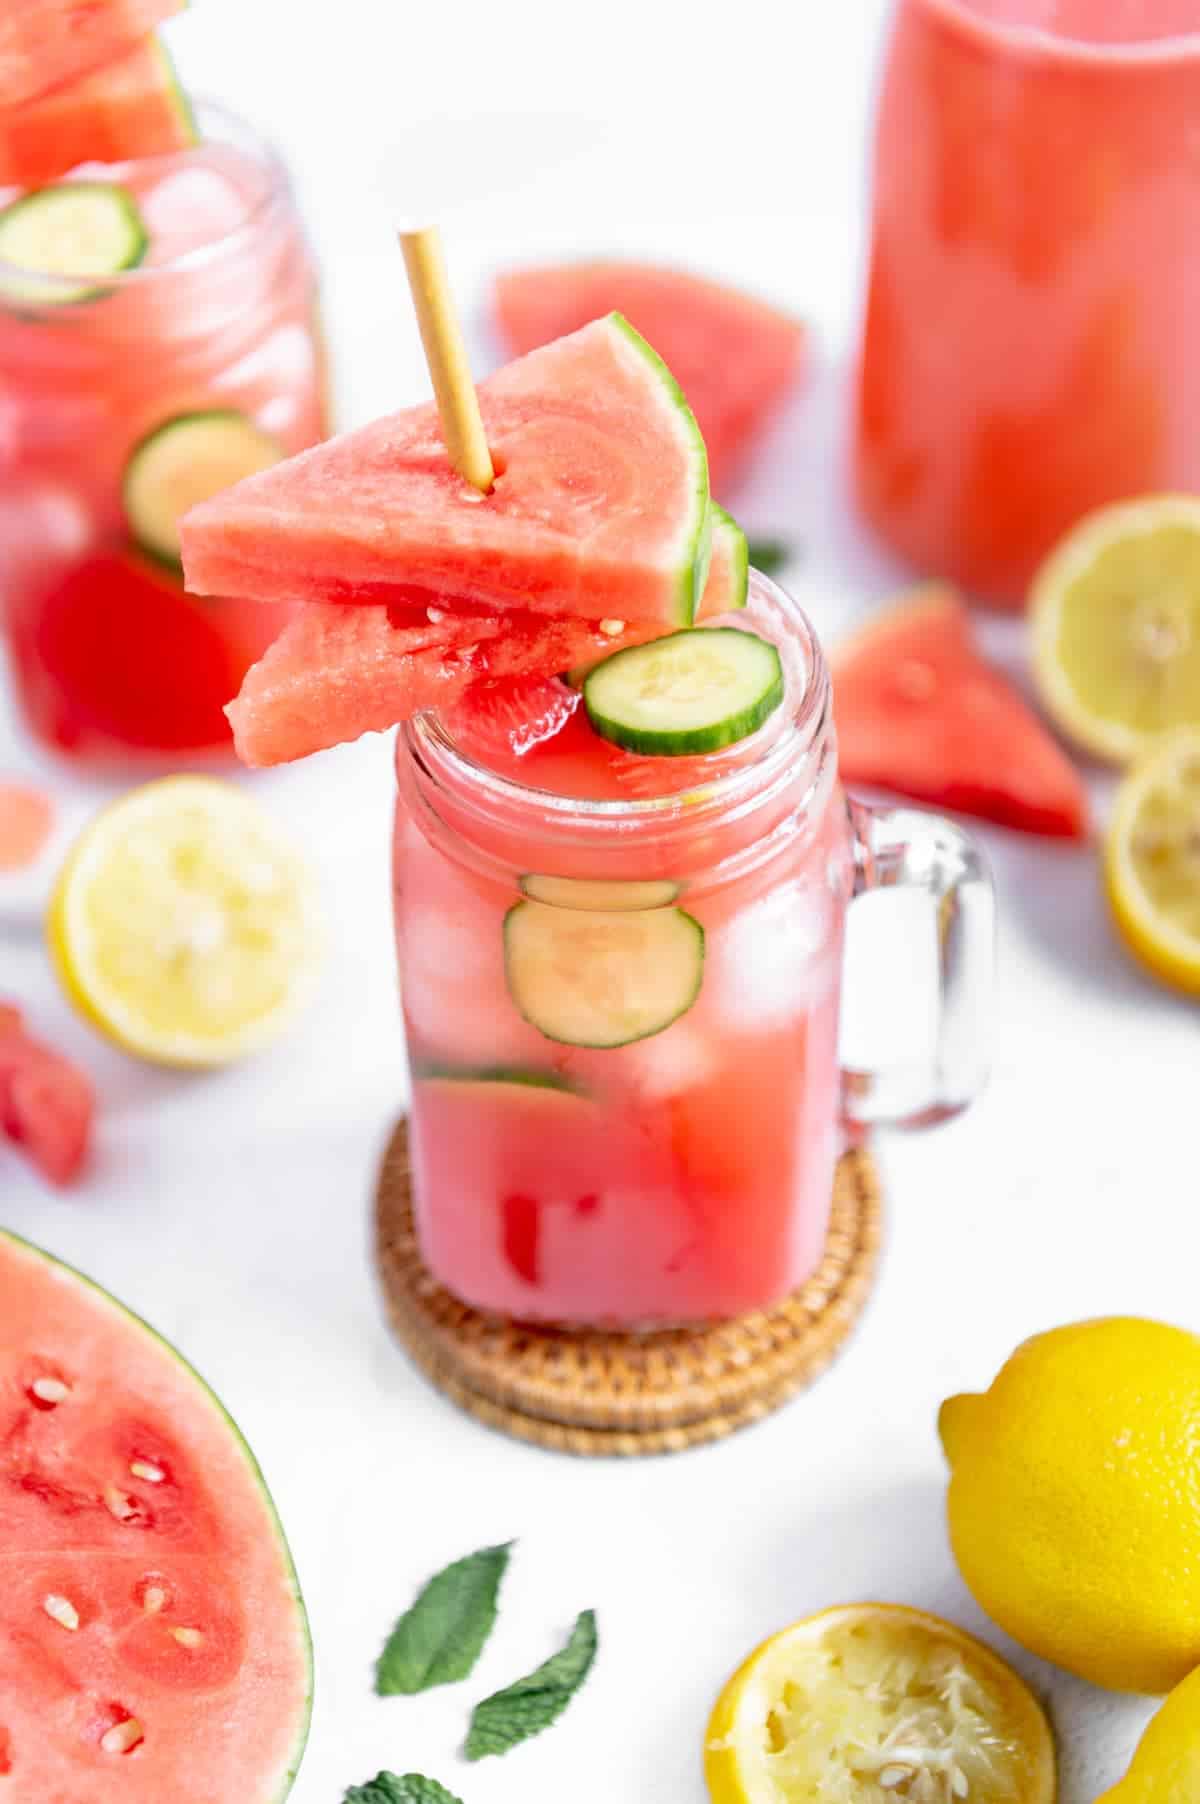 https://bestservedvegan.com/wp-content/uploads/2021/05/Watermelon-Cucumber-Lemonade-5.jpg